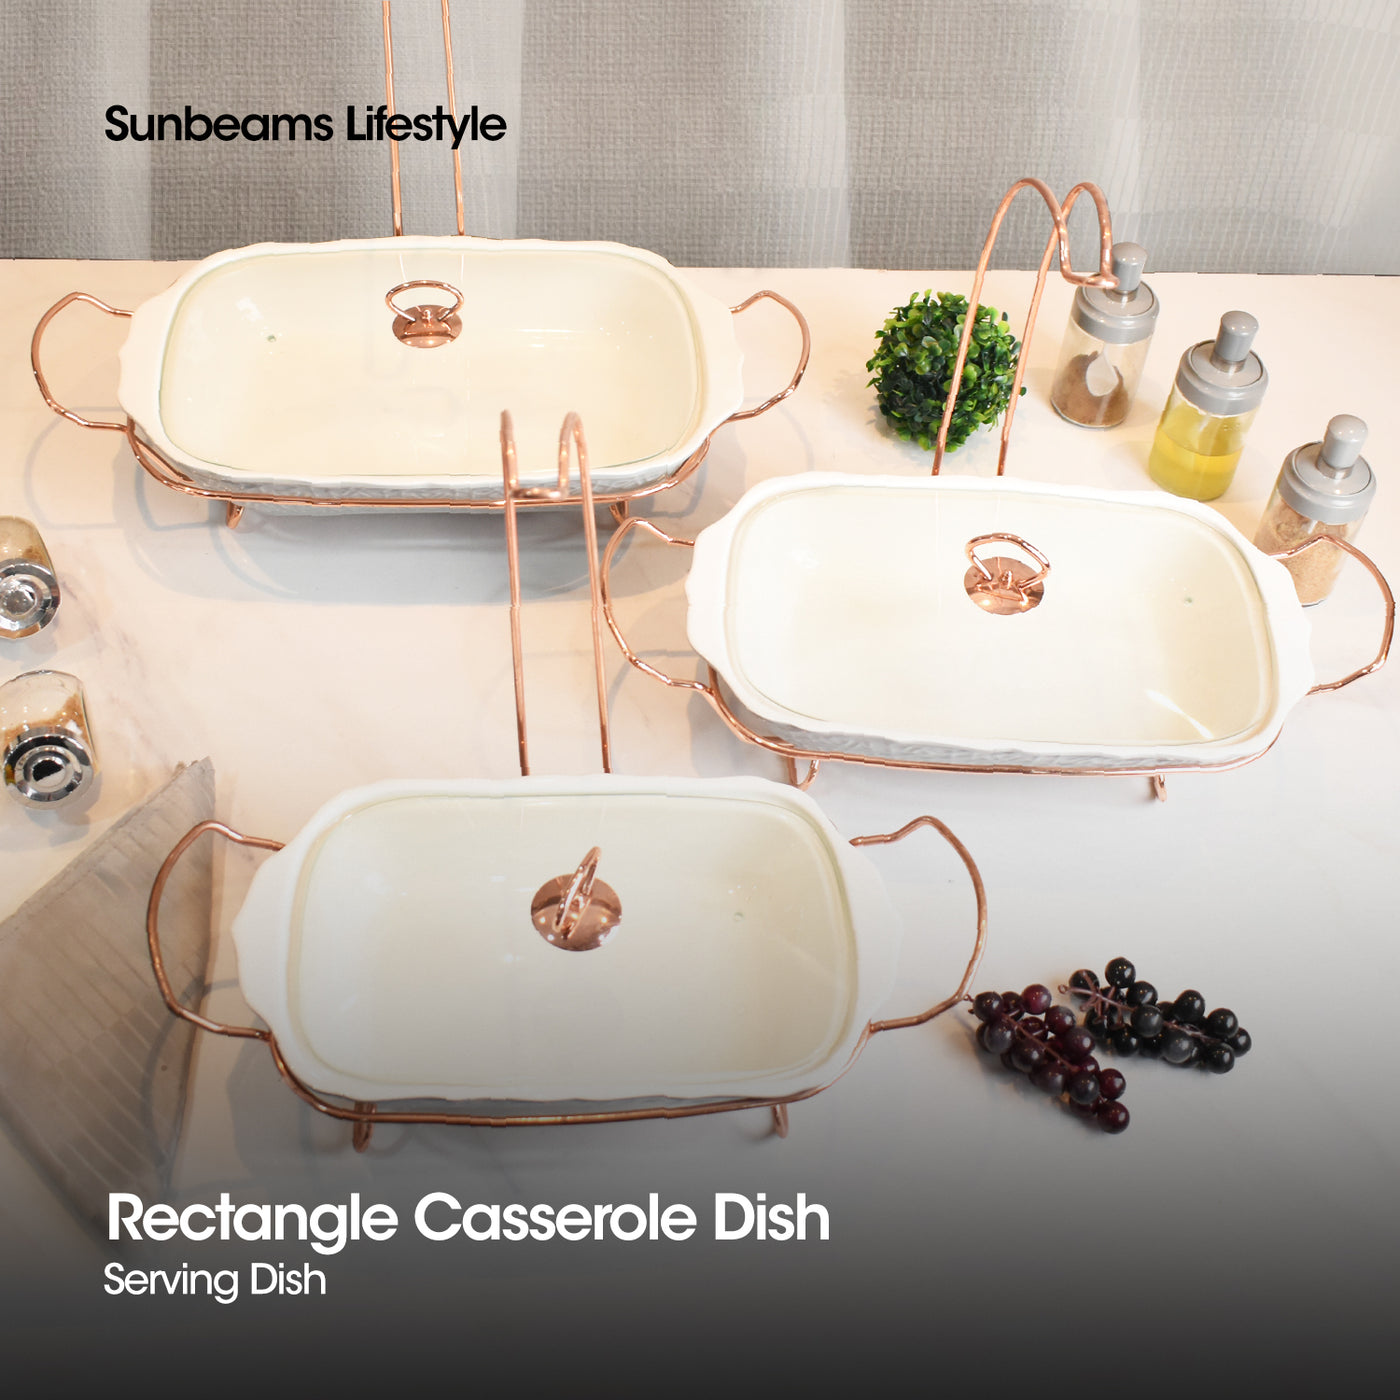 SLIQUE Premium Ceramic Rectangular Casserole Dish with Rosegold Plated Tealight Candle Holder 3700ml